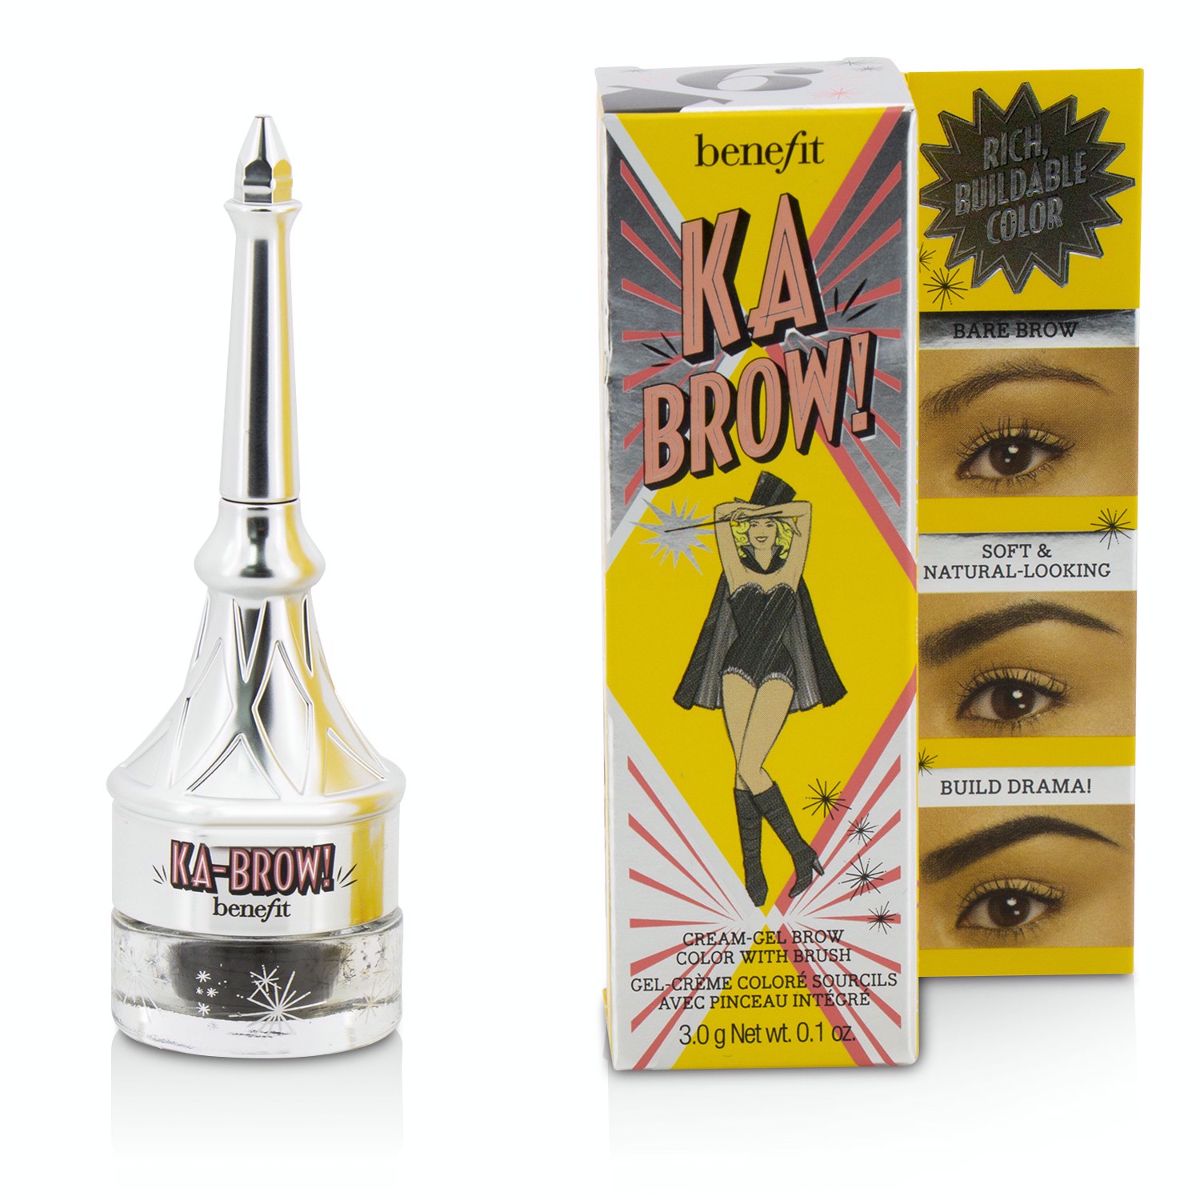 Ka Brow Cream Gel Brow Color With Brush - # 6 (Deep) Benefit Image